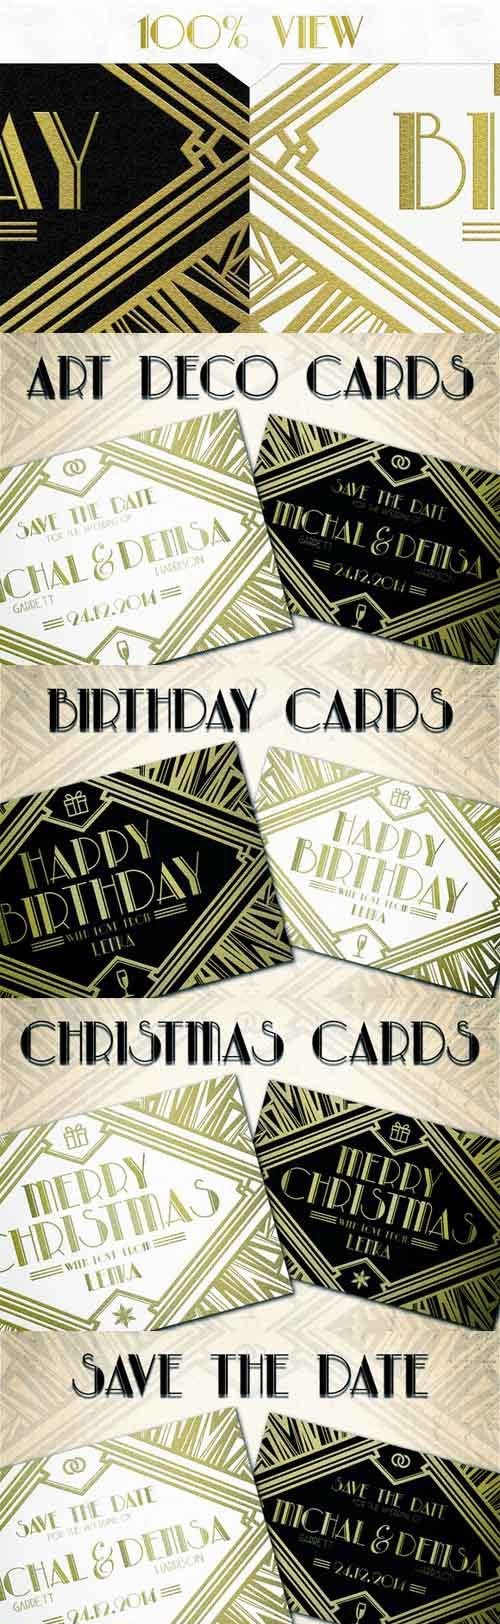 CM - Art Deco Cards 123076